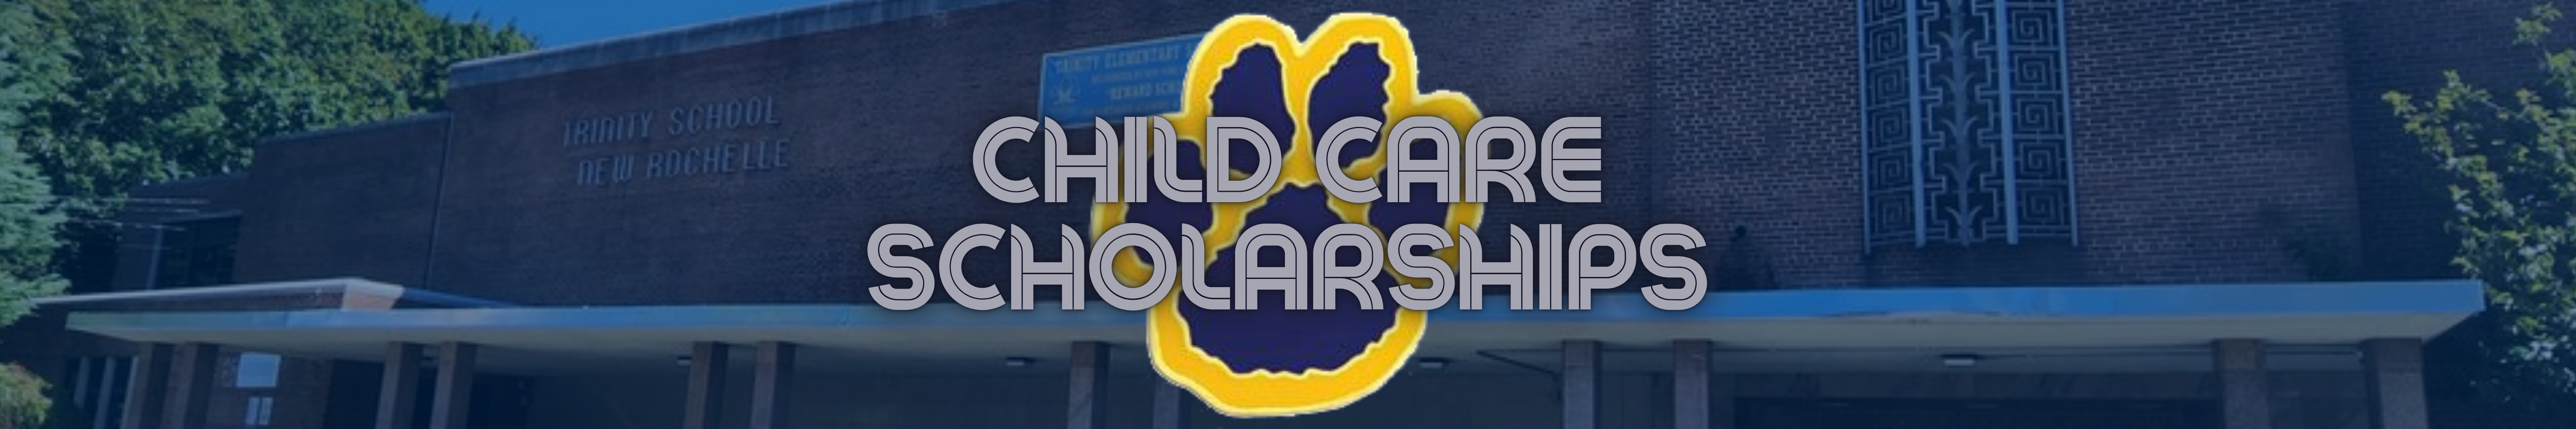 Child Care Scholarships banner